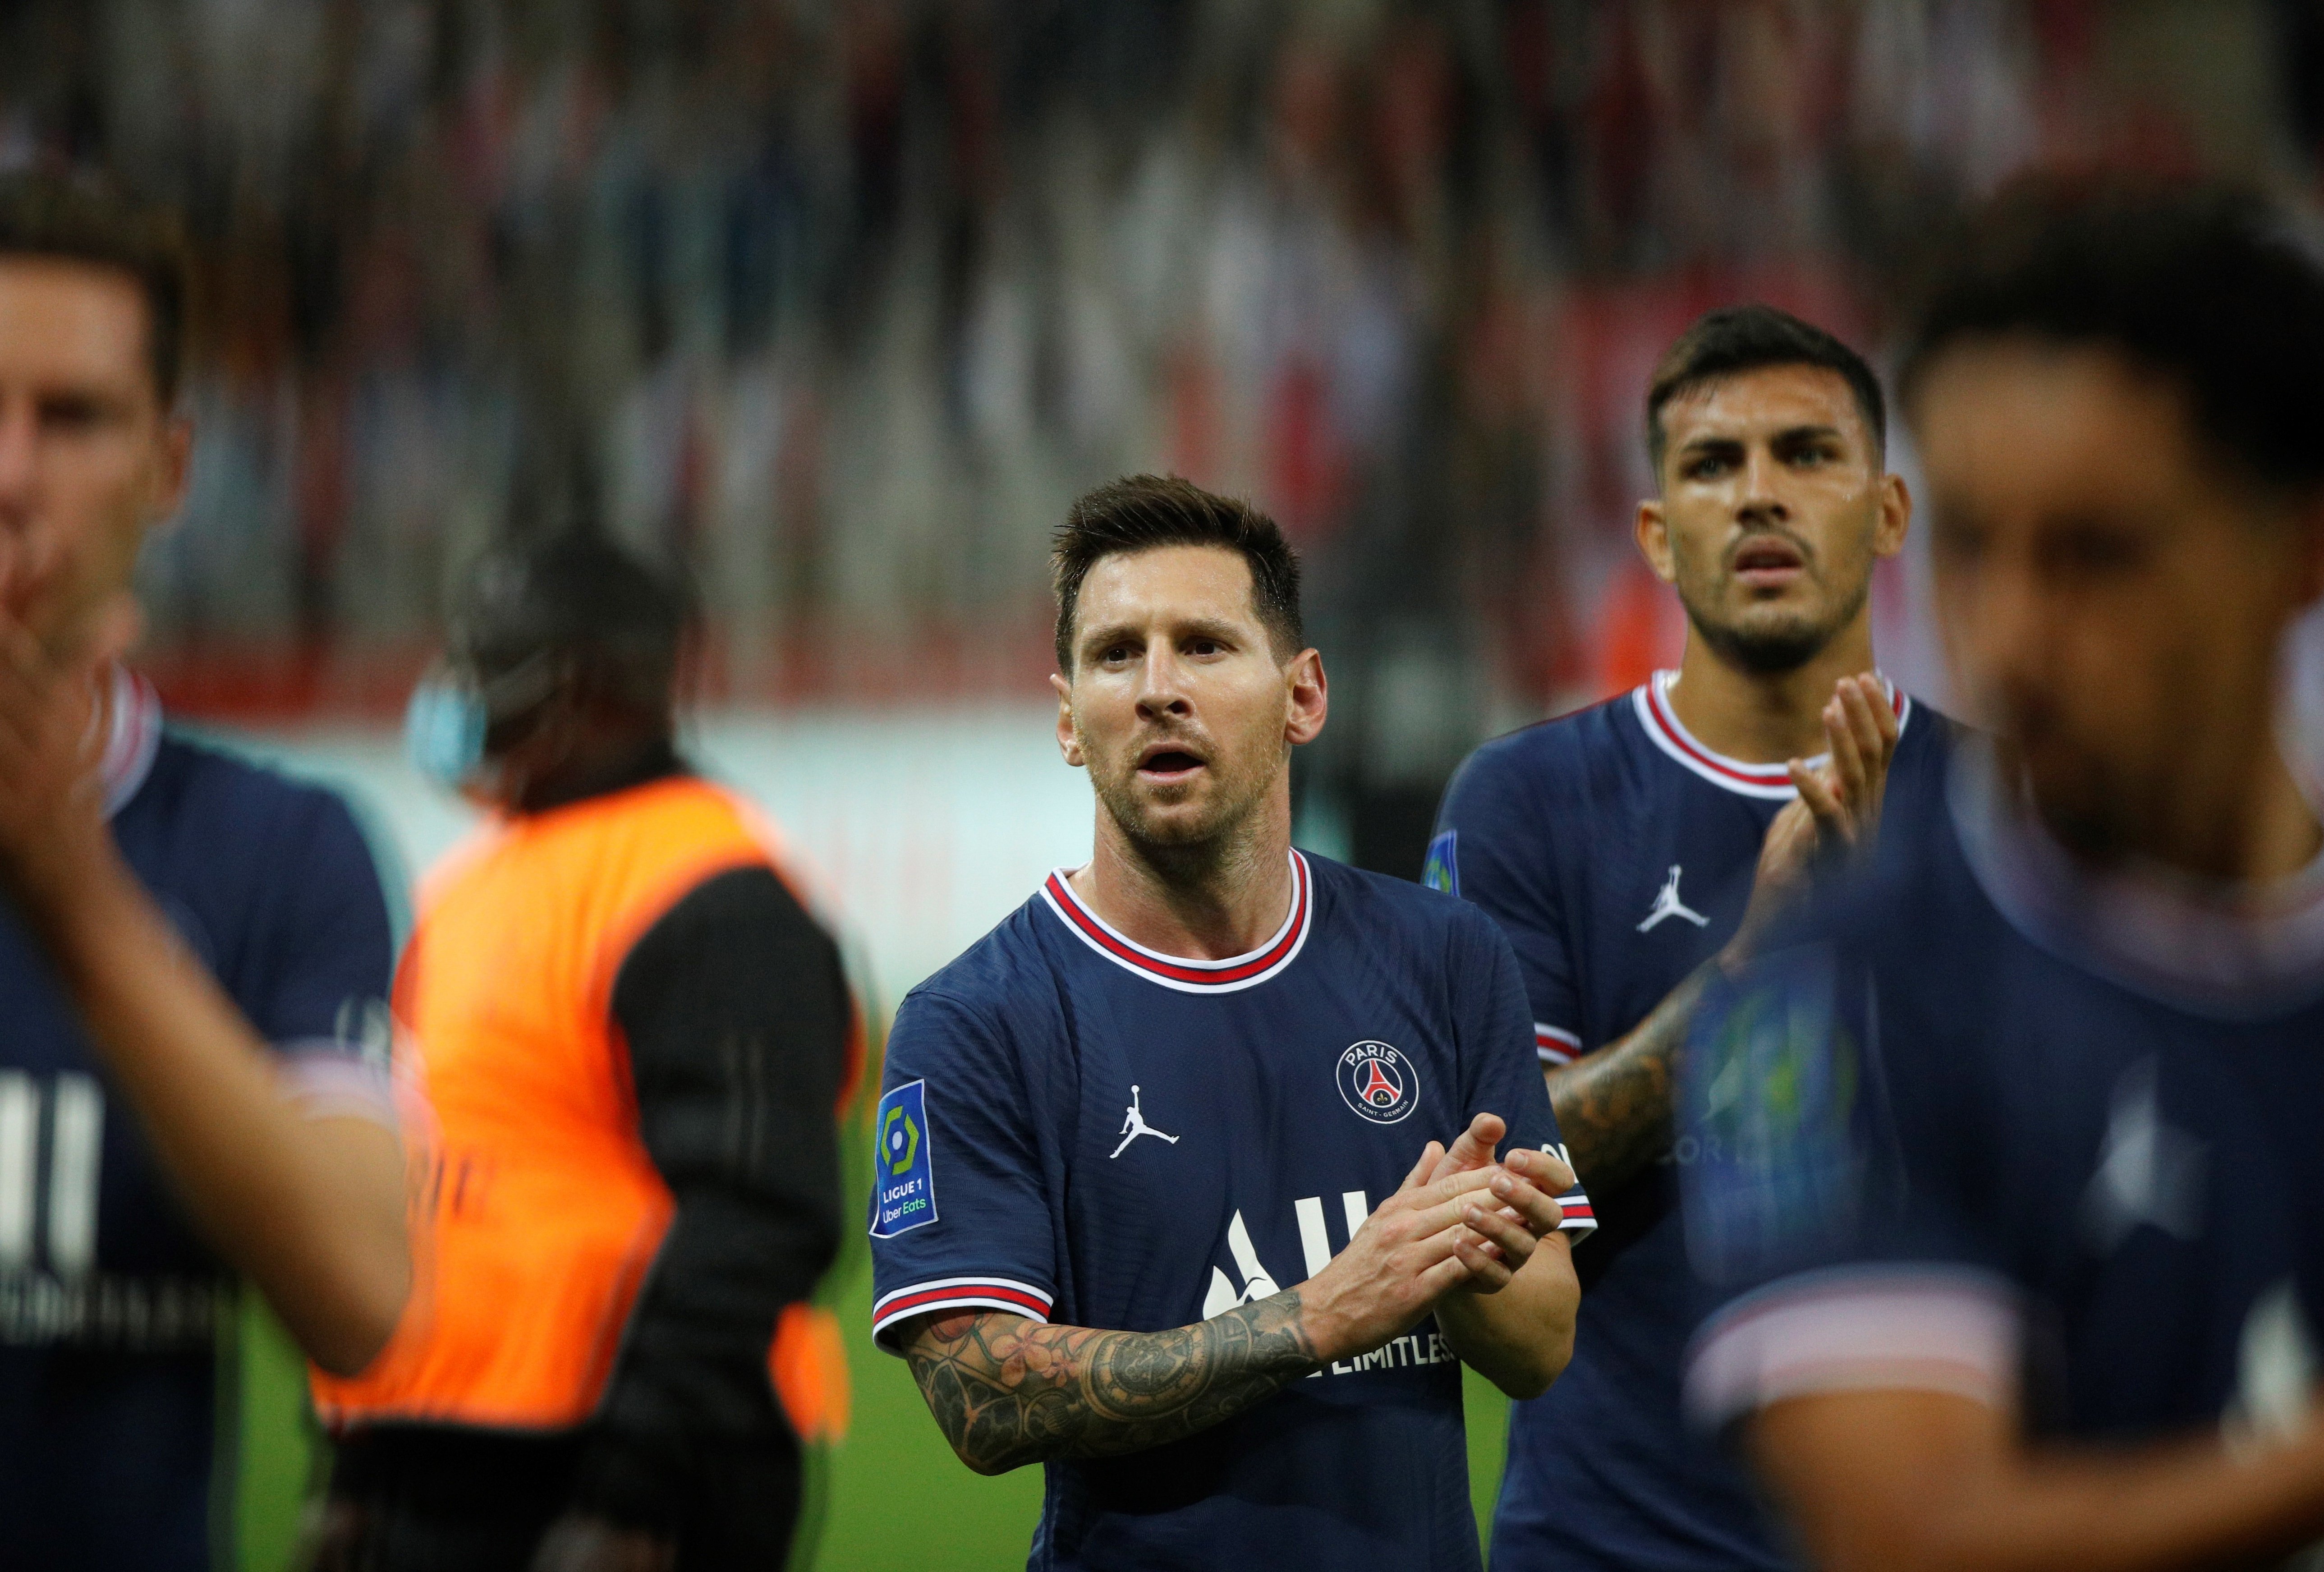 La vida de Messi en París no es maravillosa: primer problema grave